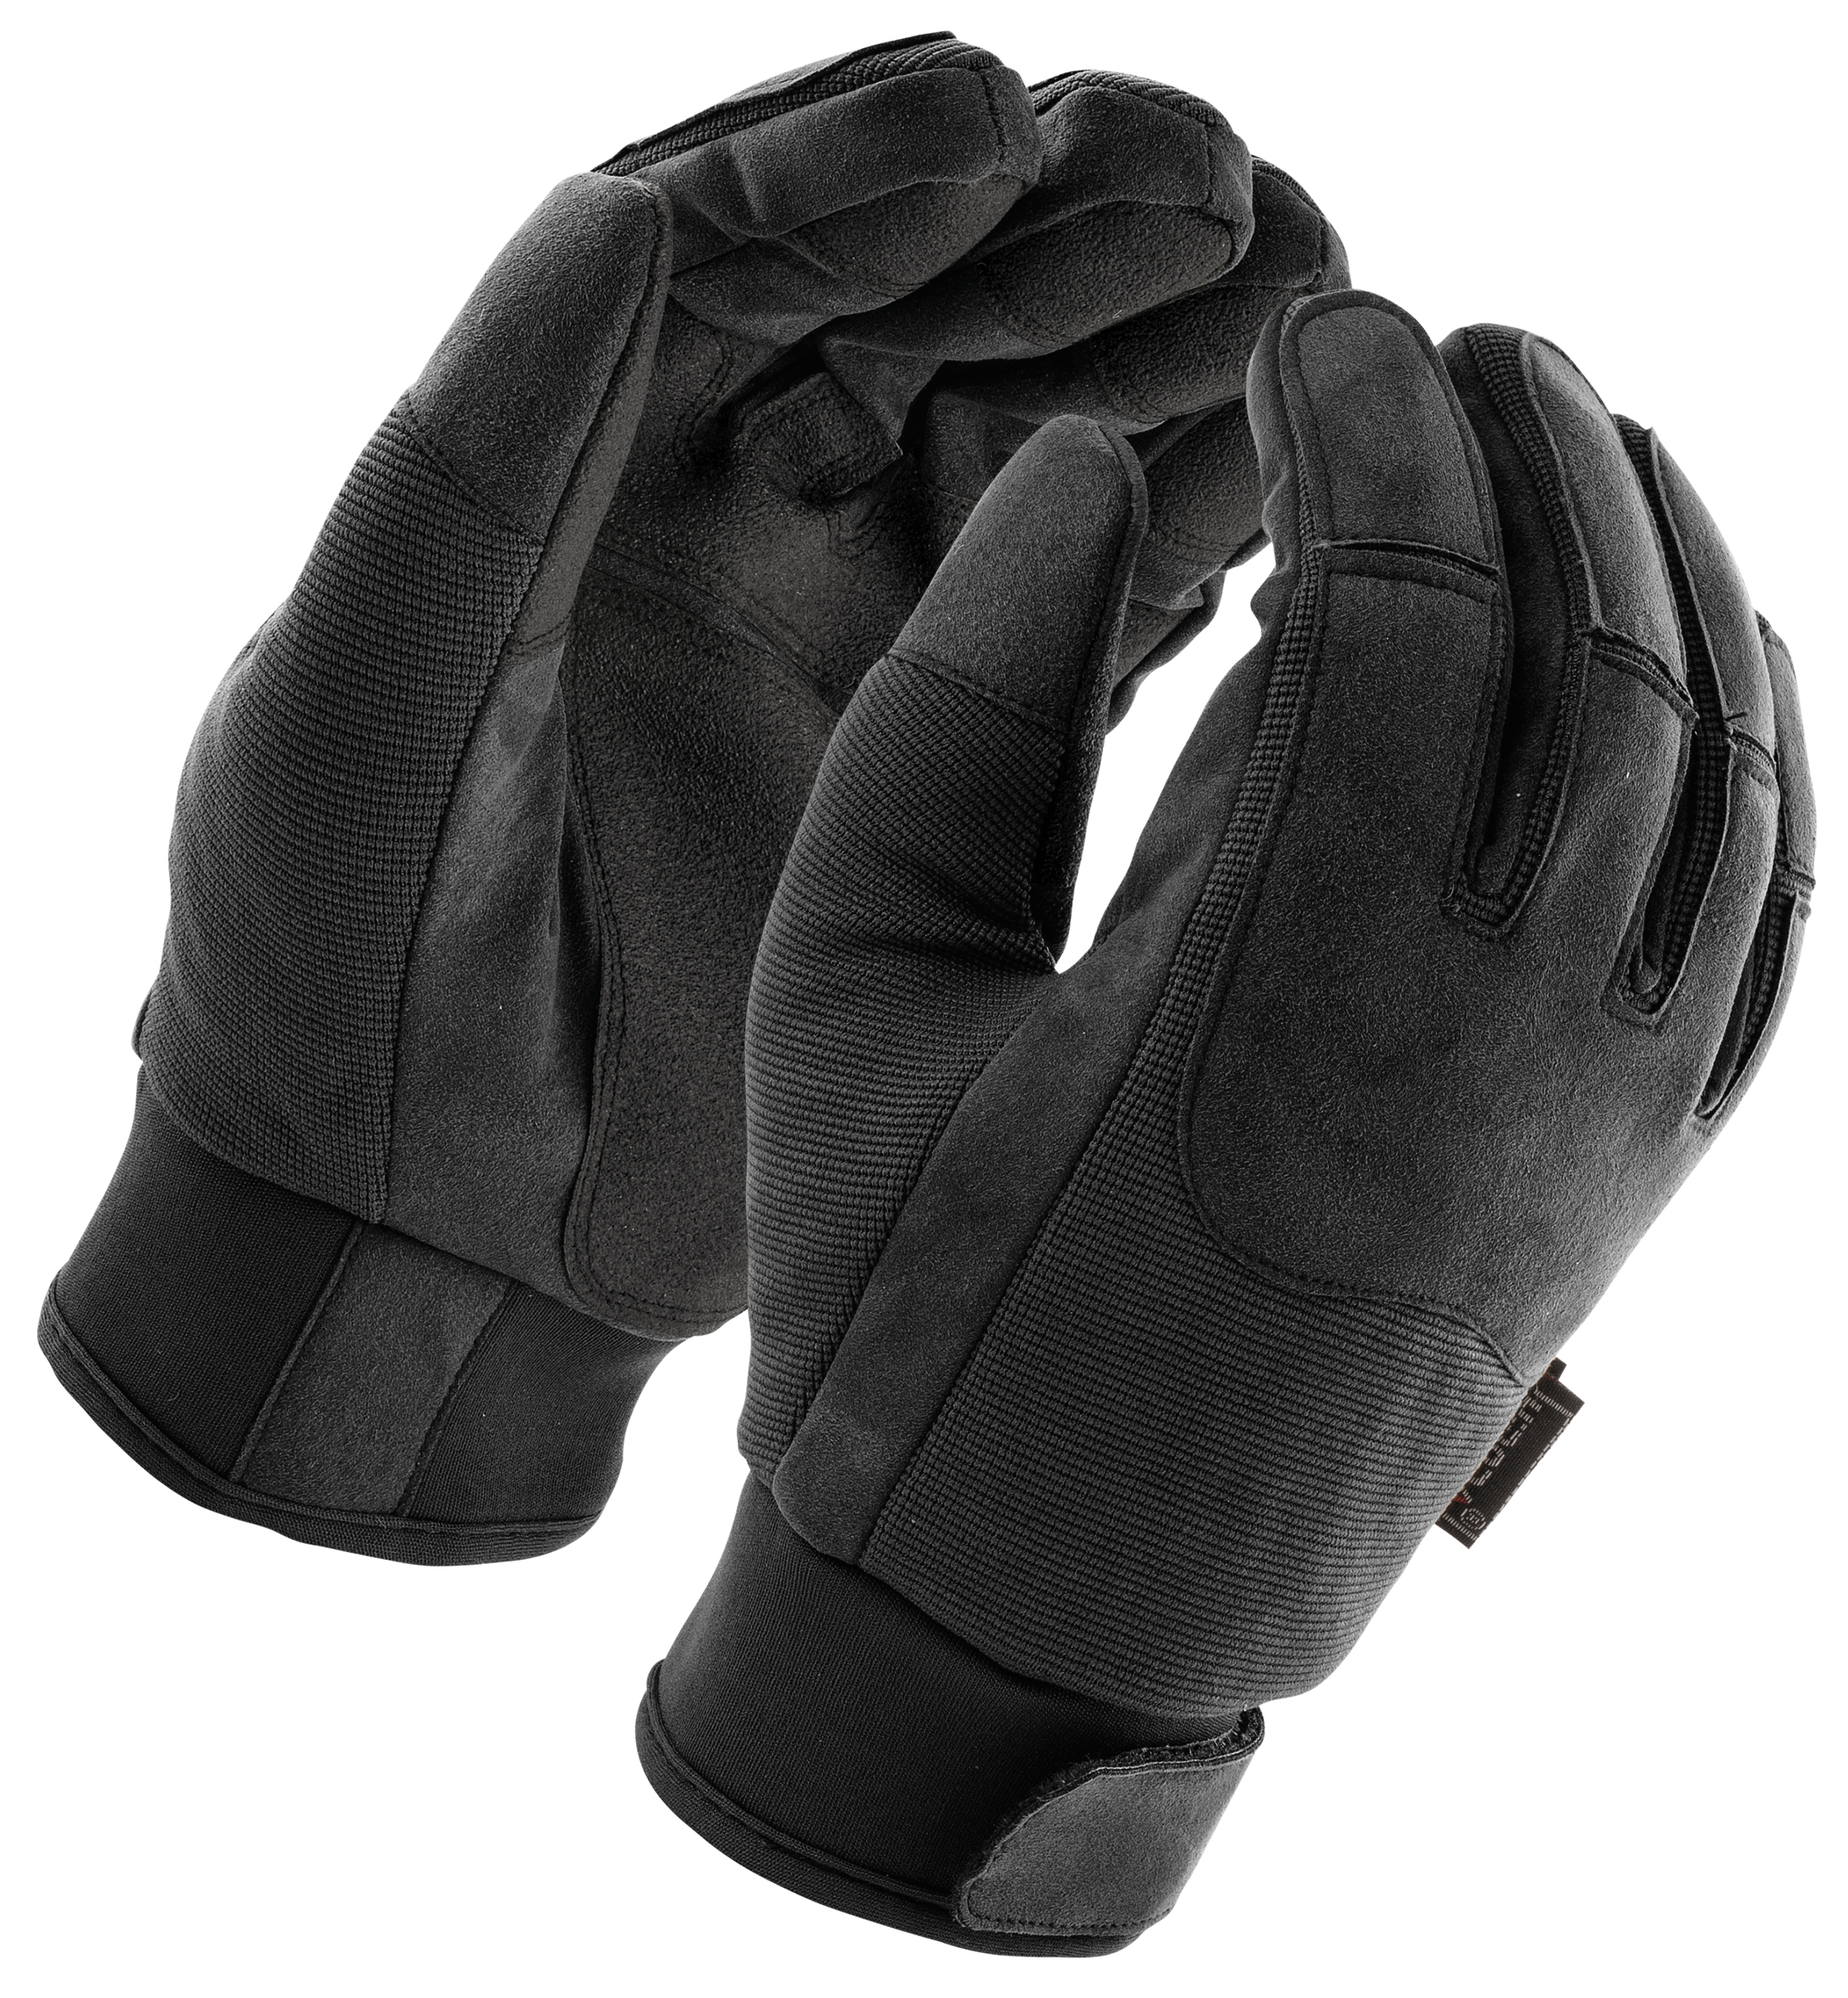 Mil-Tec Army Winter Gloves Winterhandschuhe | Recon Company Deutschland